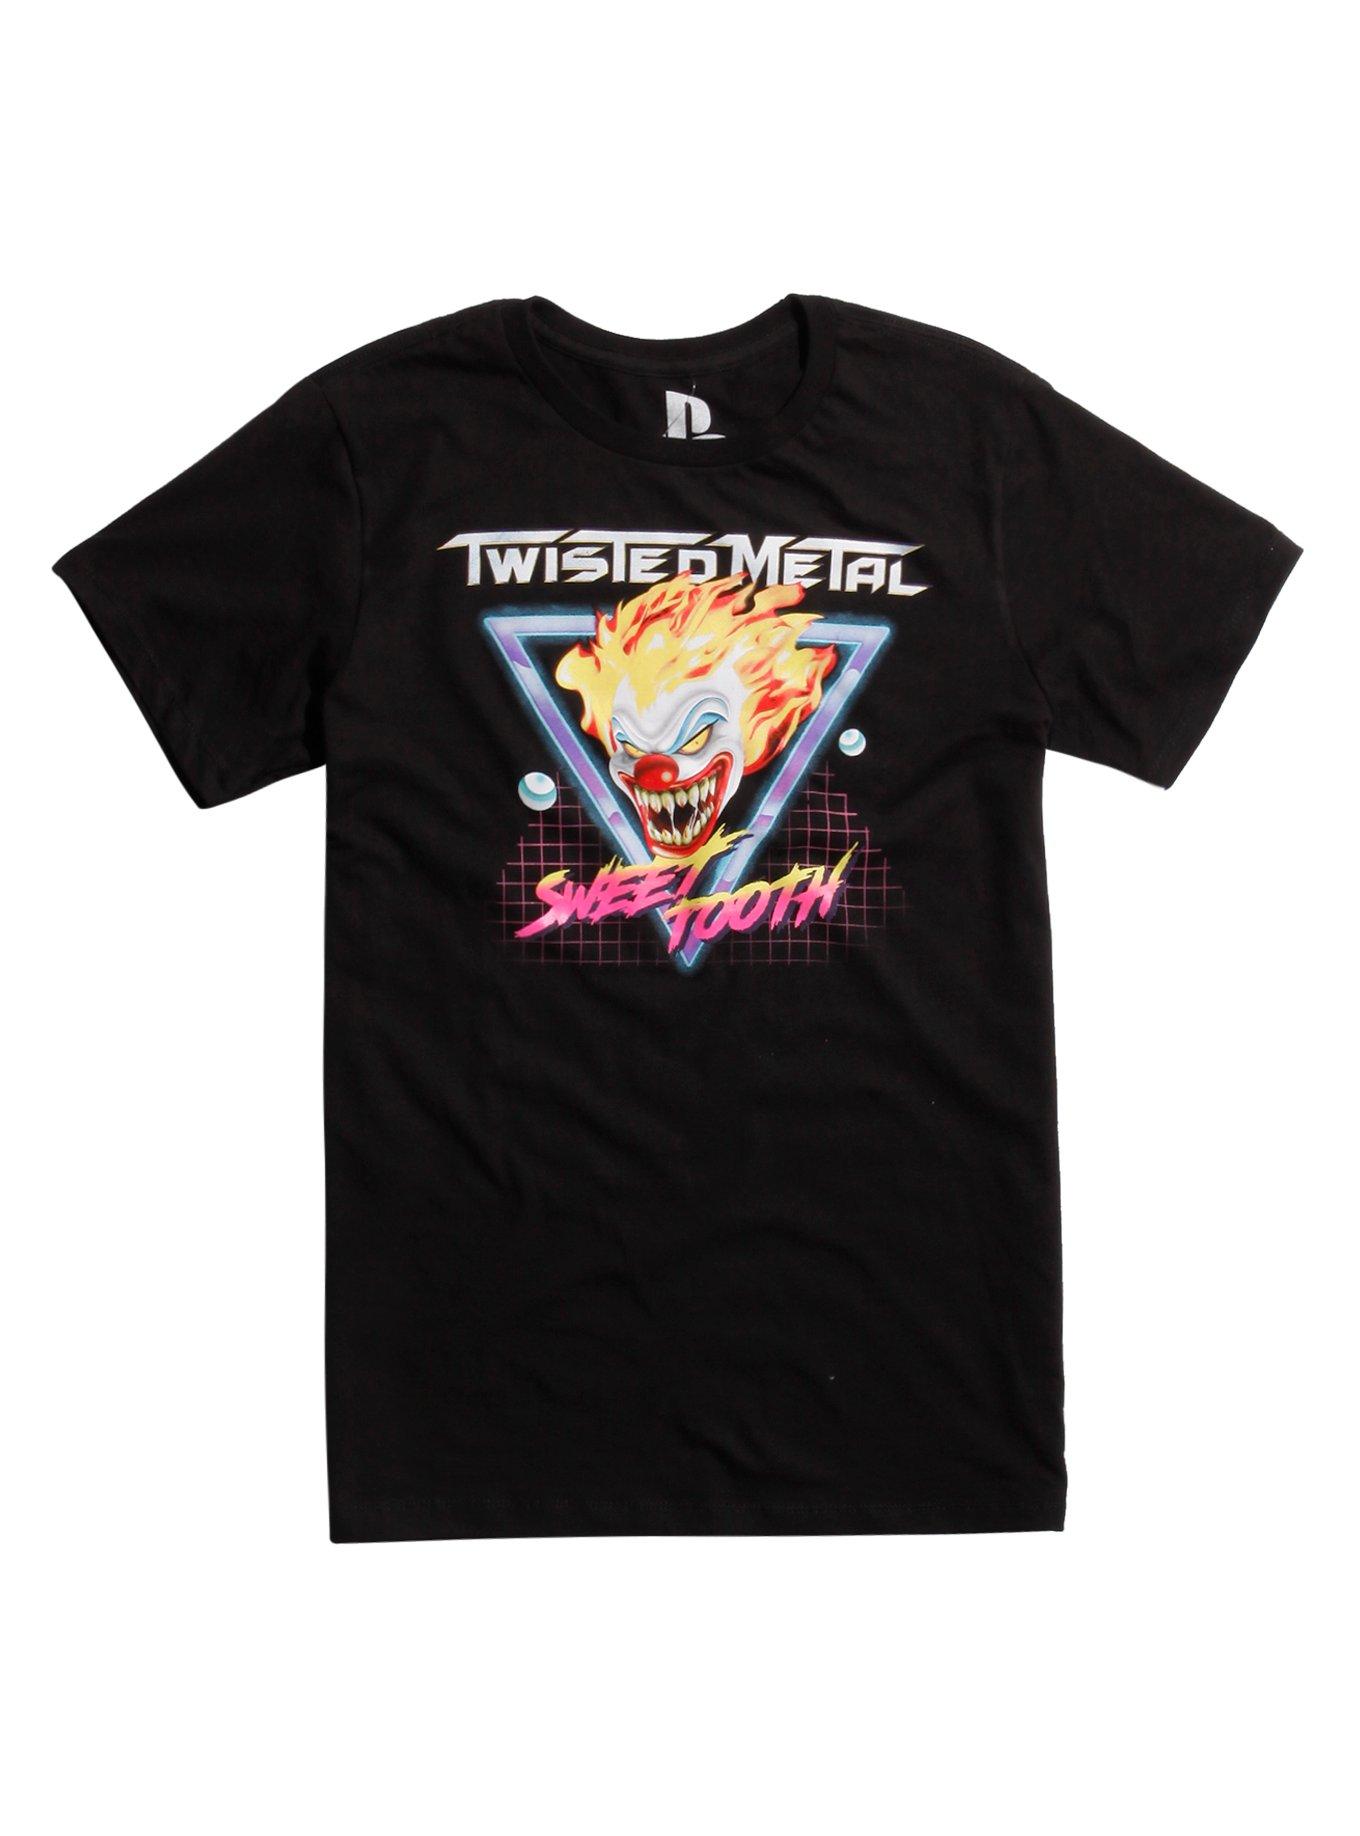 Twisted Metal Sweet Tooth T-Shirt, BLACK, hi-res